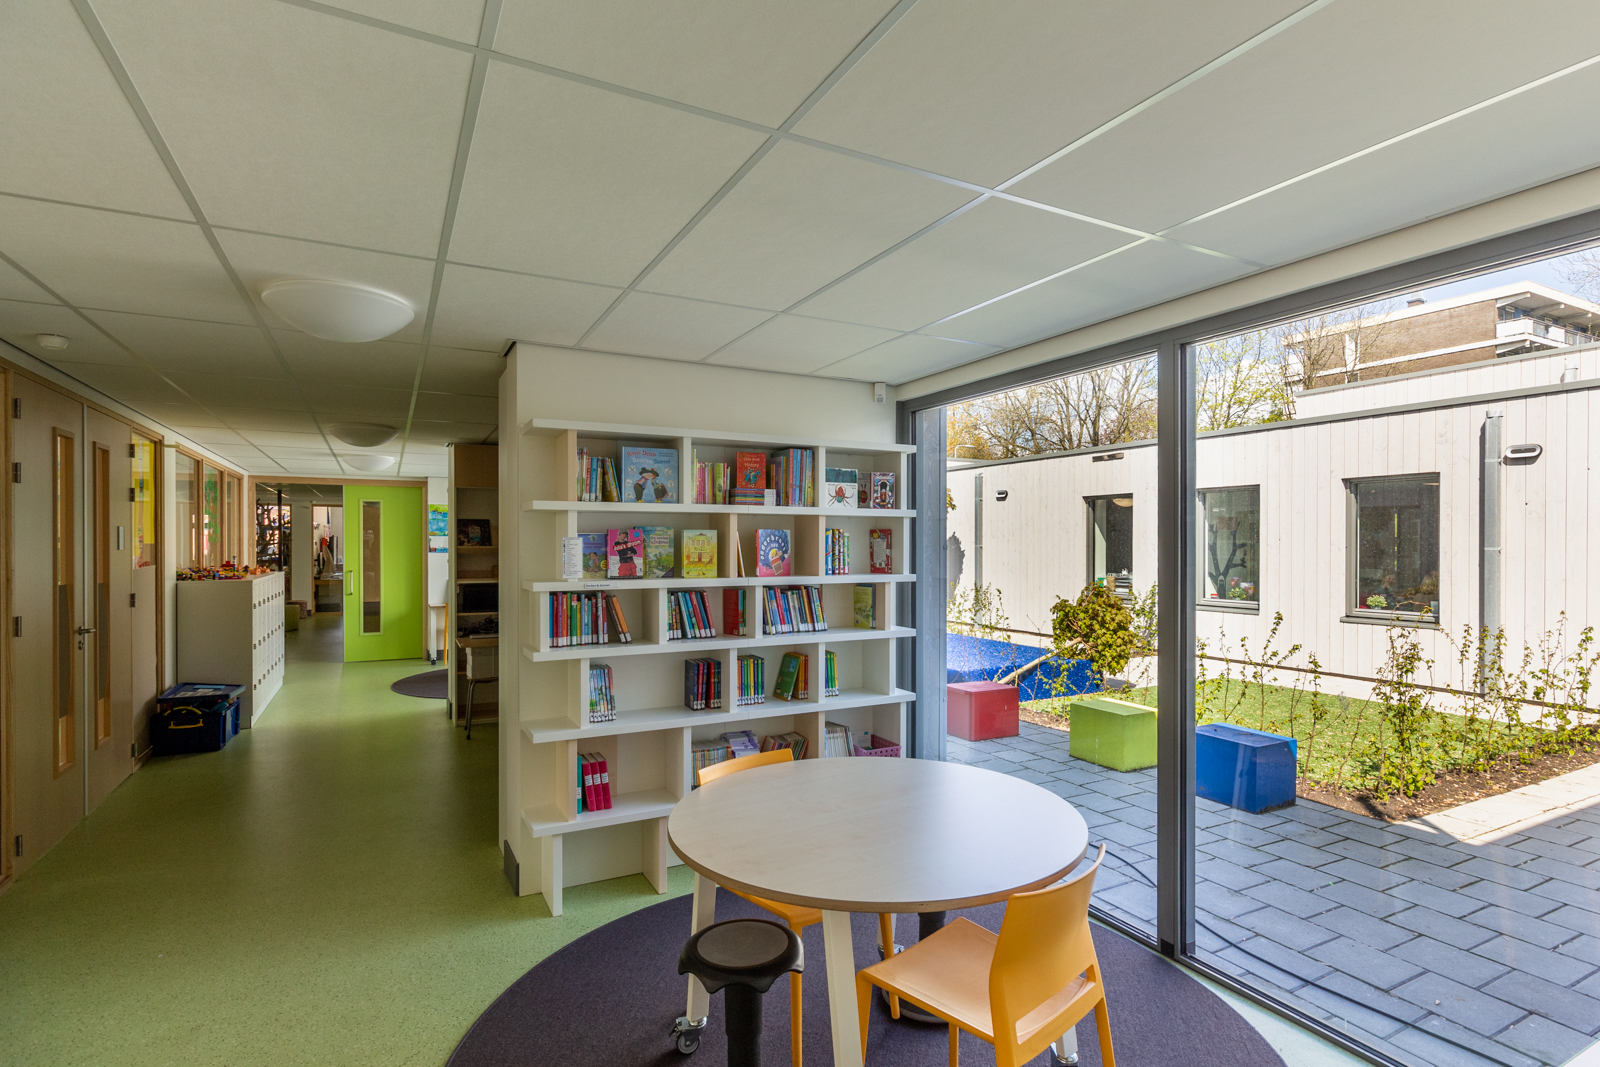 Bethelschool-Waddinxveen-